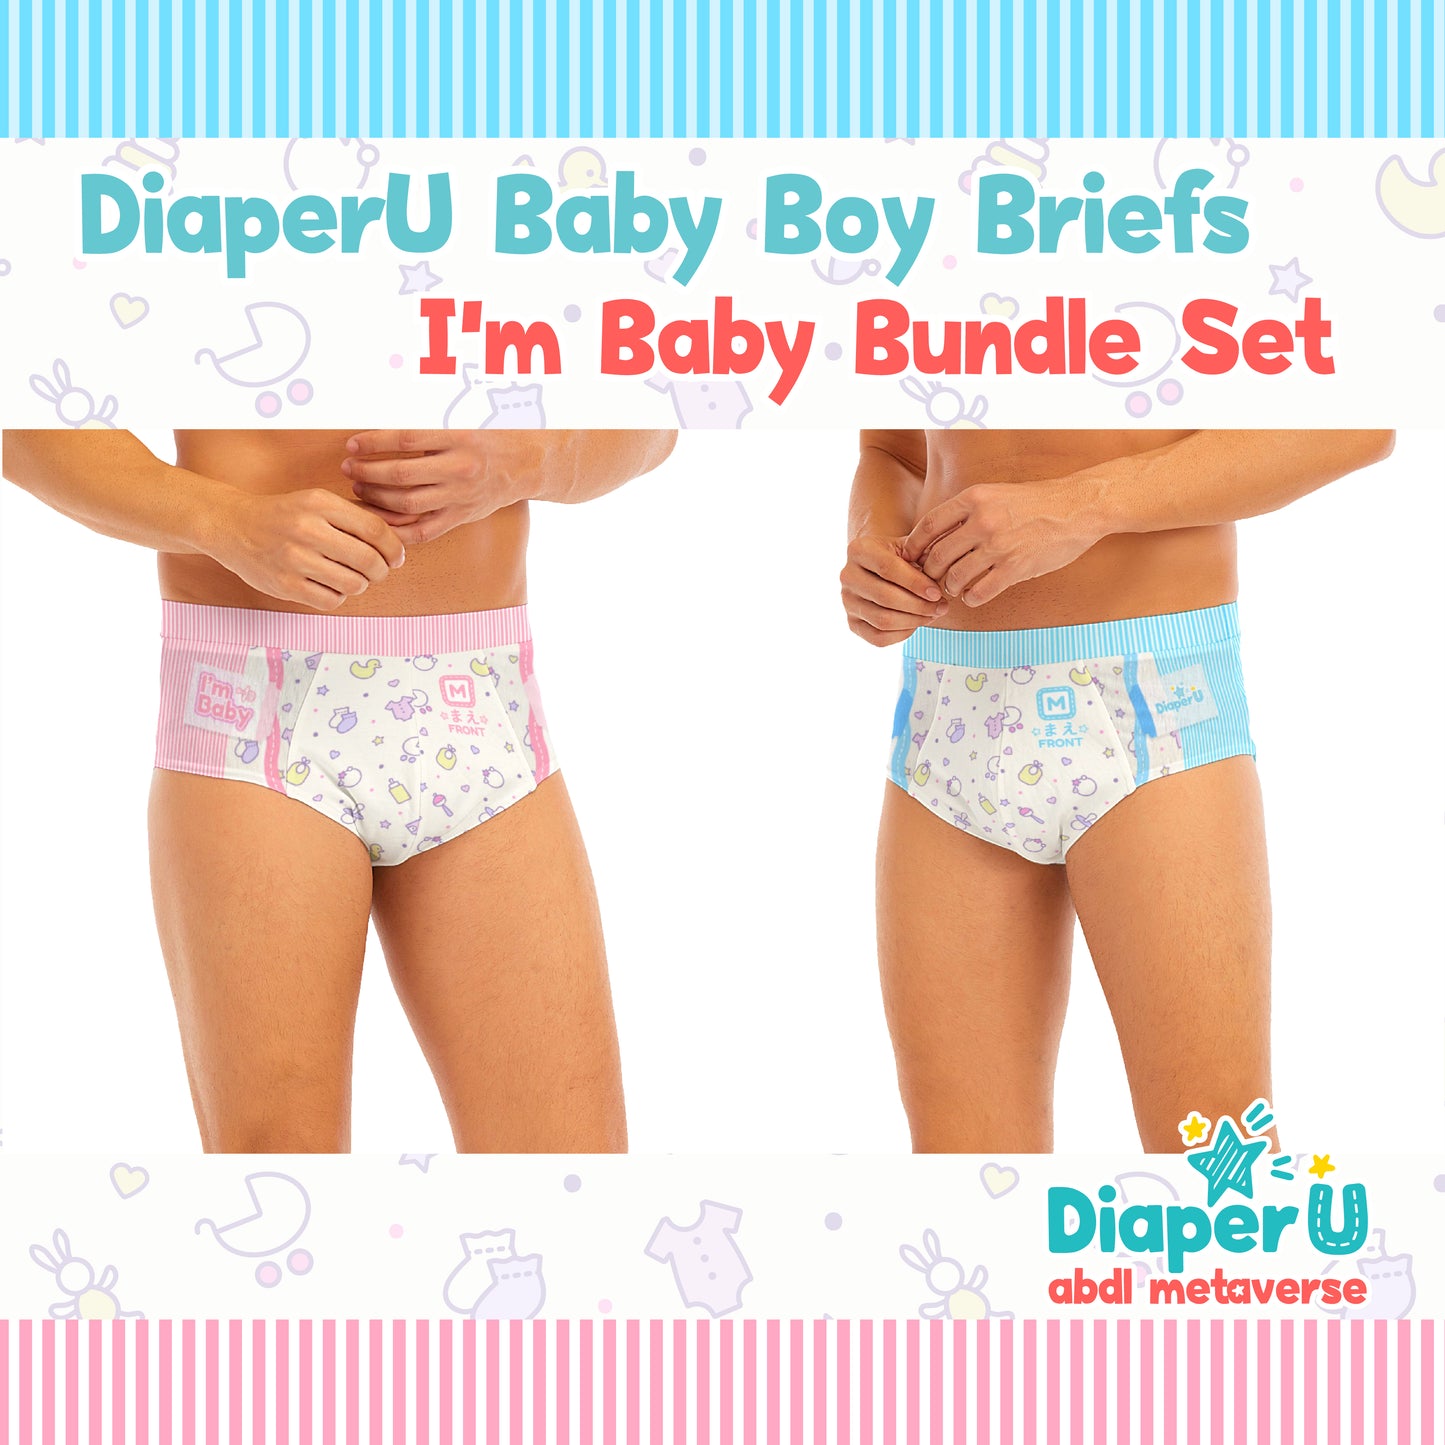 ABDL Baby Boy Briefs Bundle - I'm Baby Bundle Set